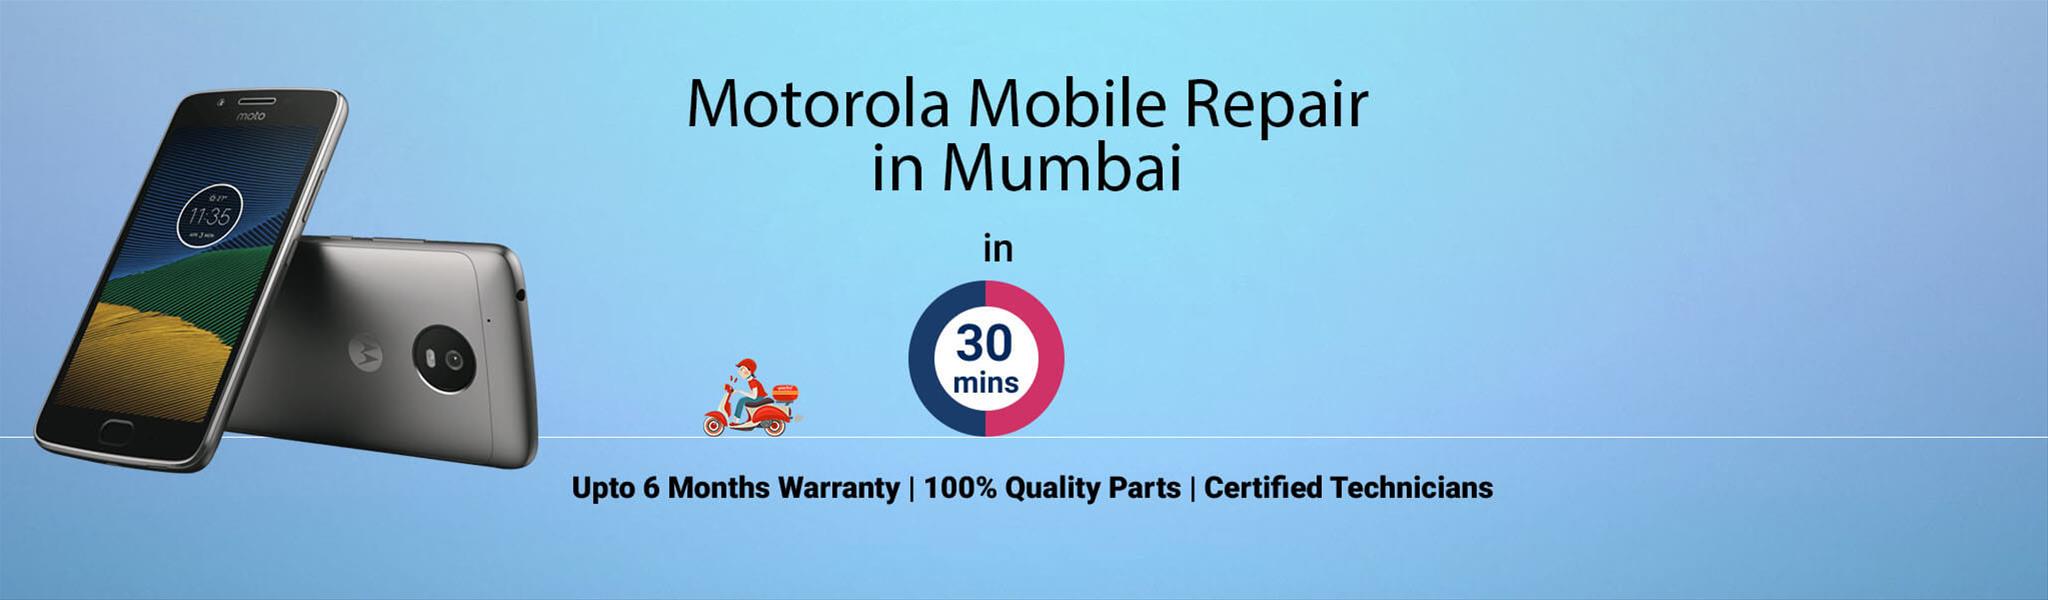 motorola-repair-service-banner-mumbai.jpg